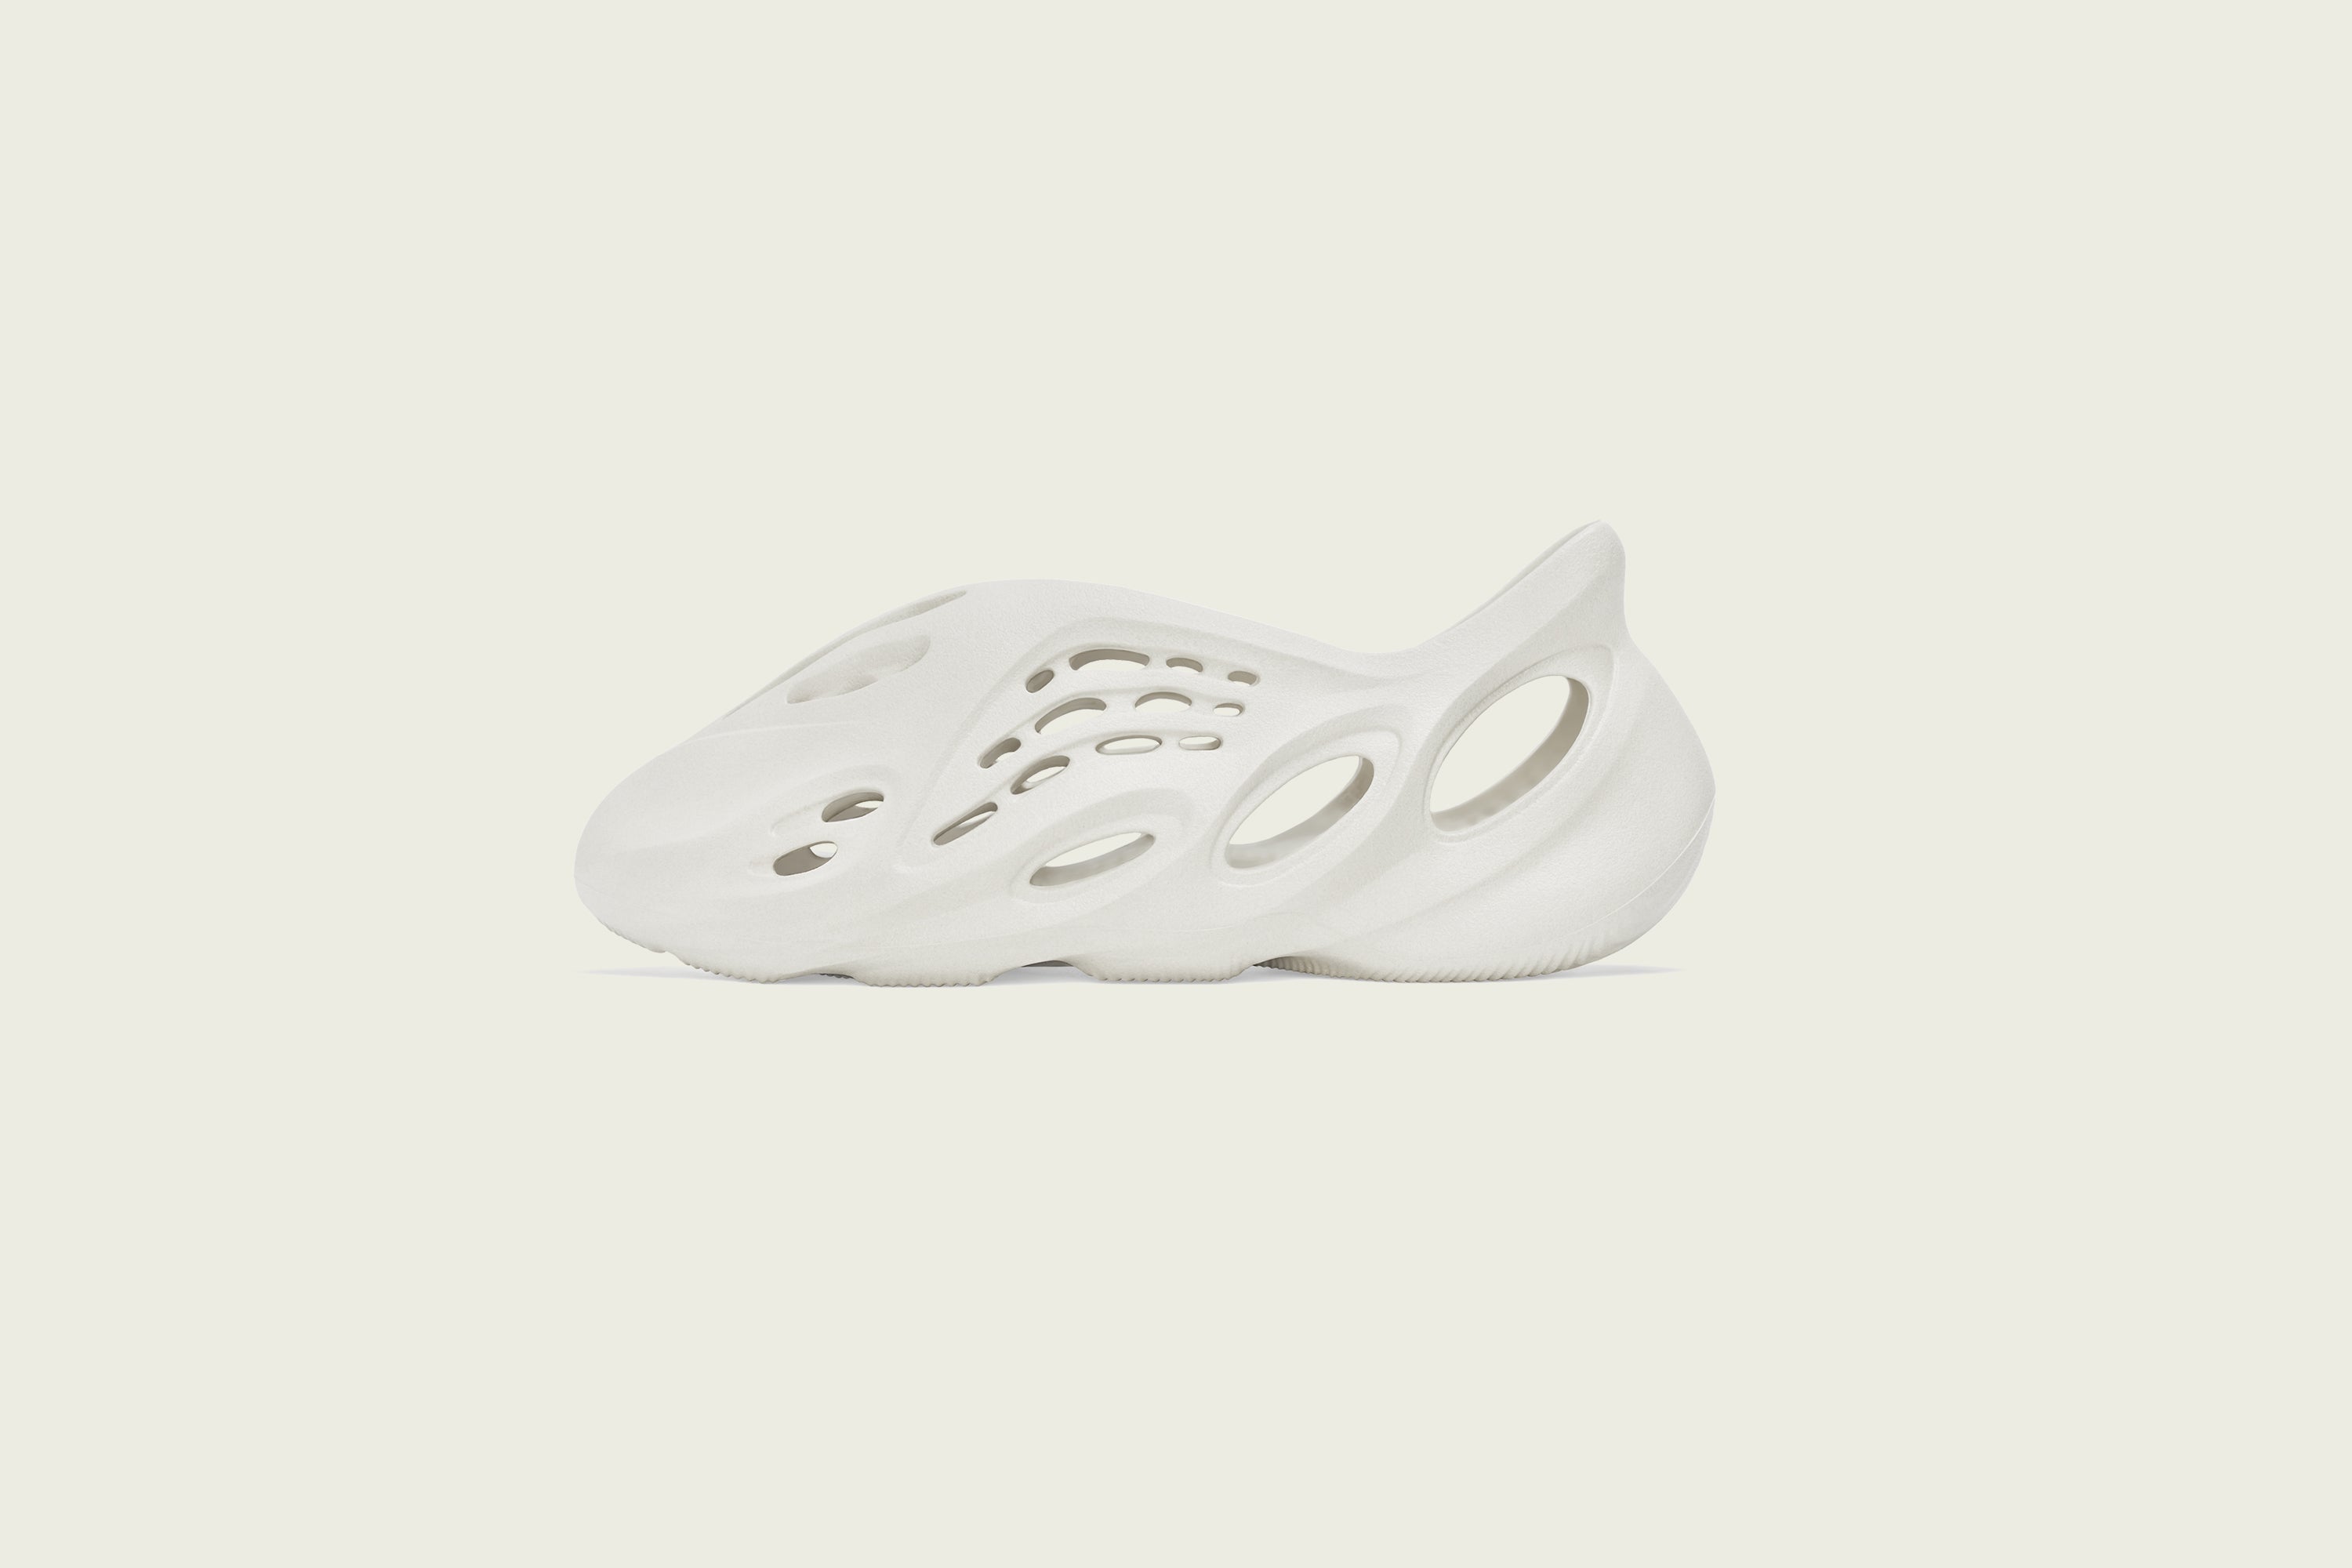 adidas Yeezy Foam Runner